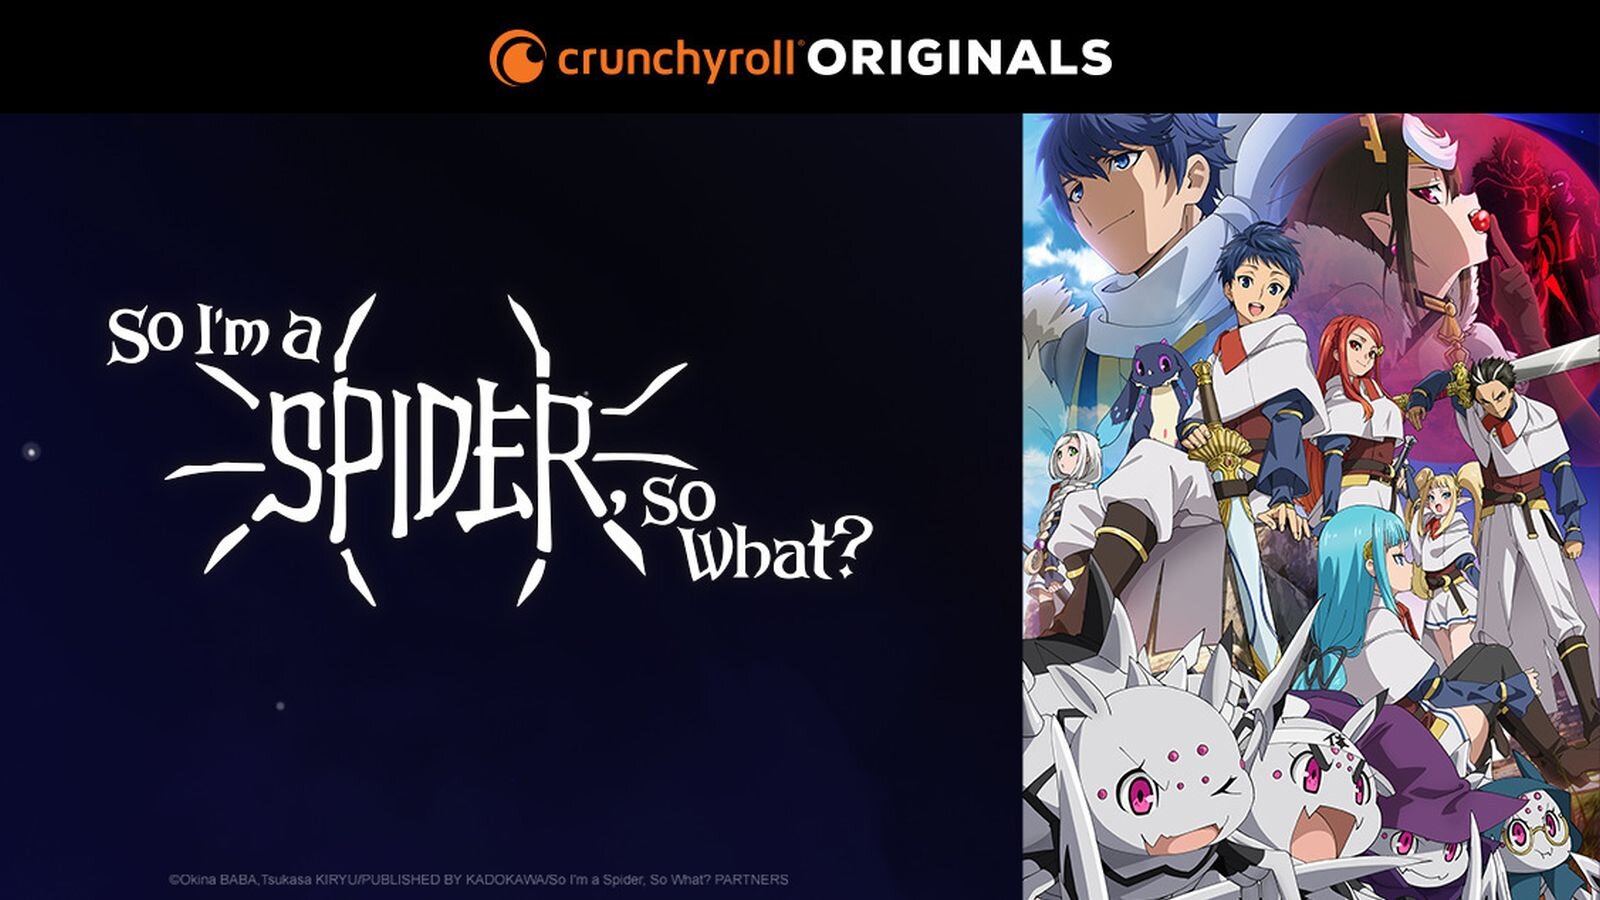 Crunchyroll Slates Epic Fall Season with 25+ Anime Titles